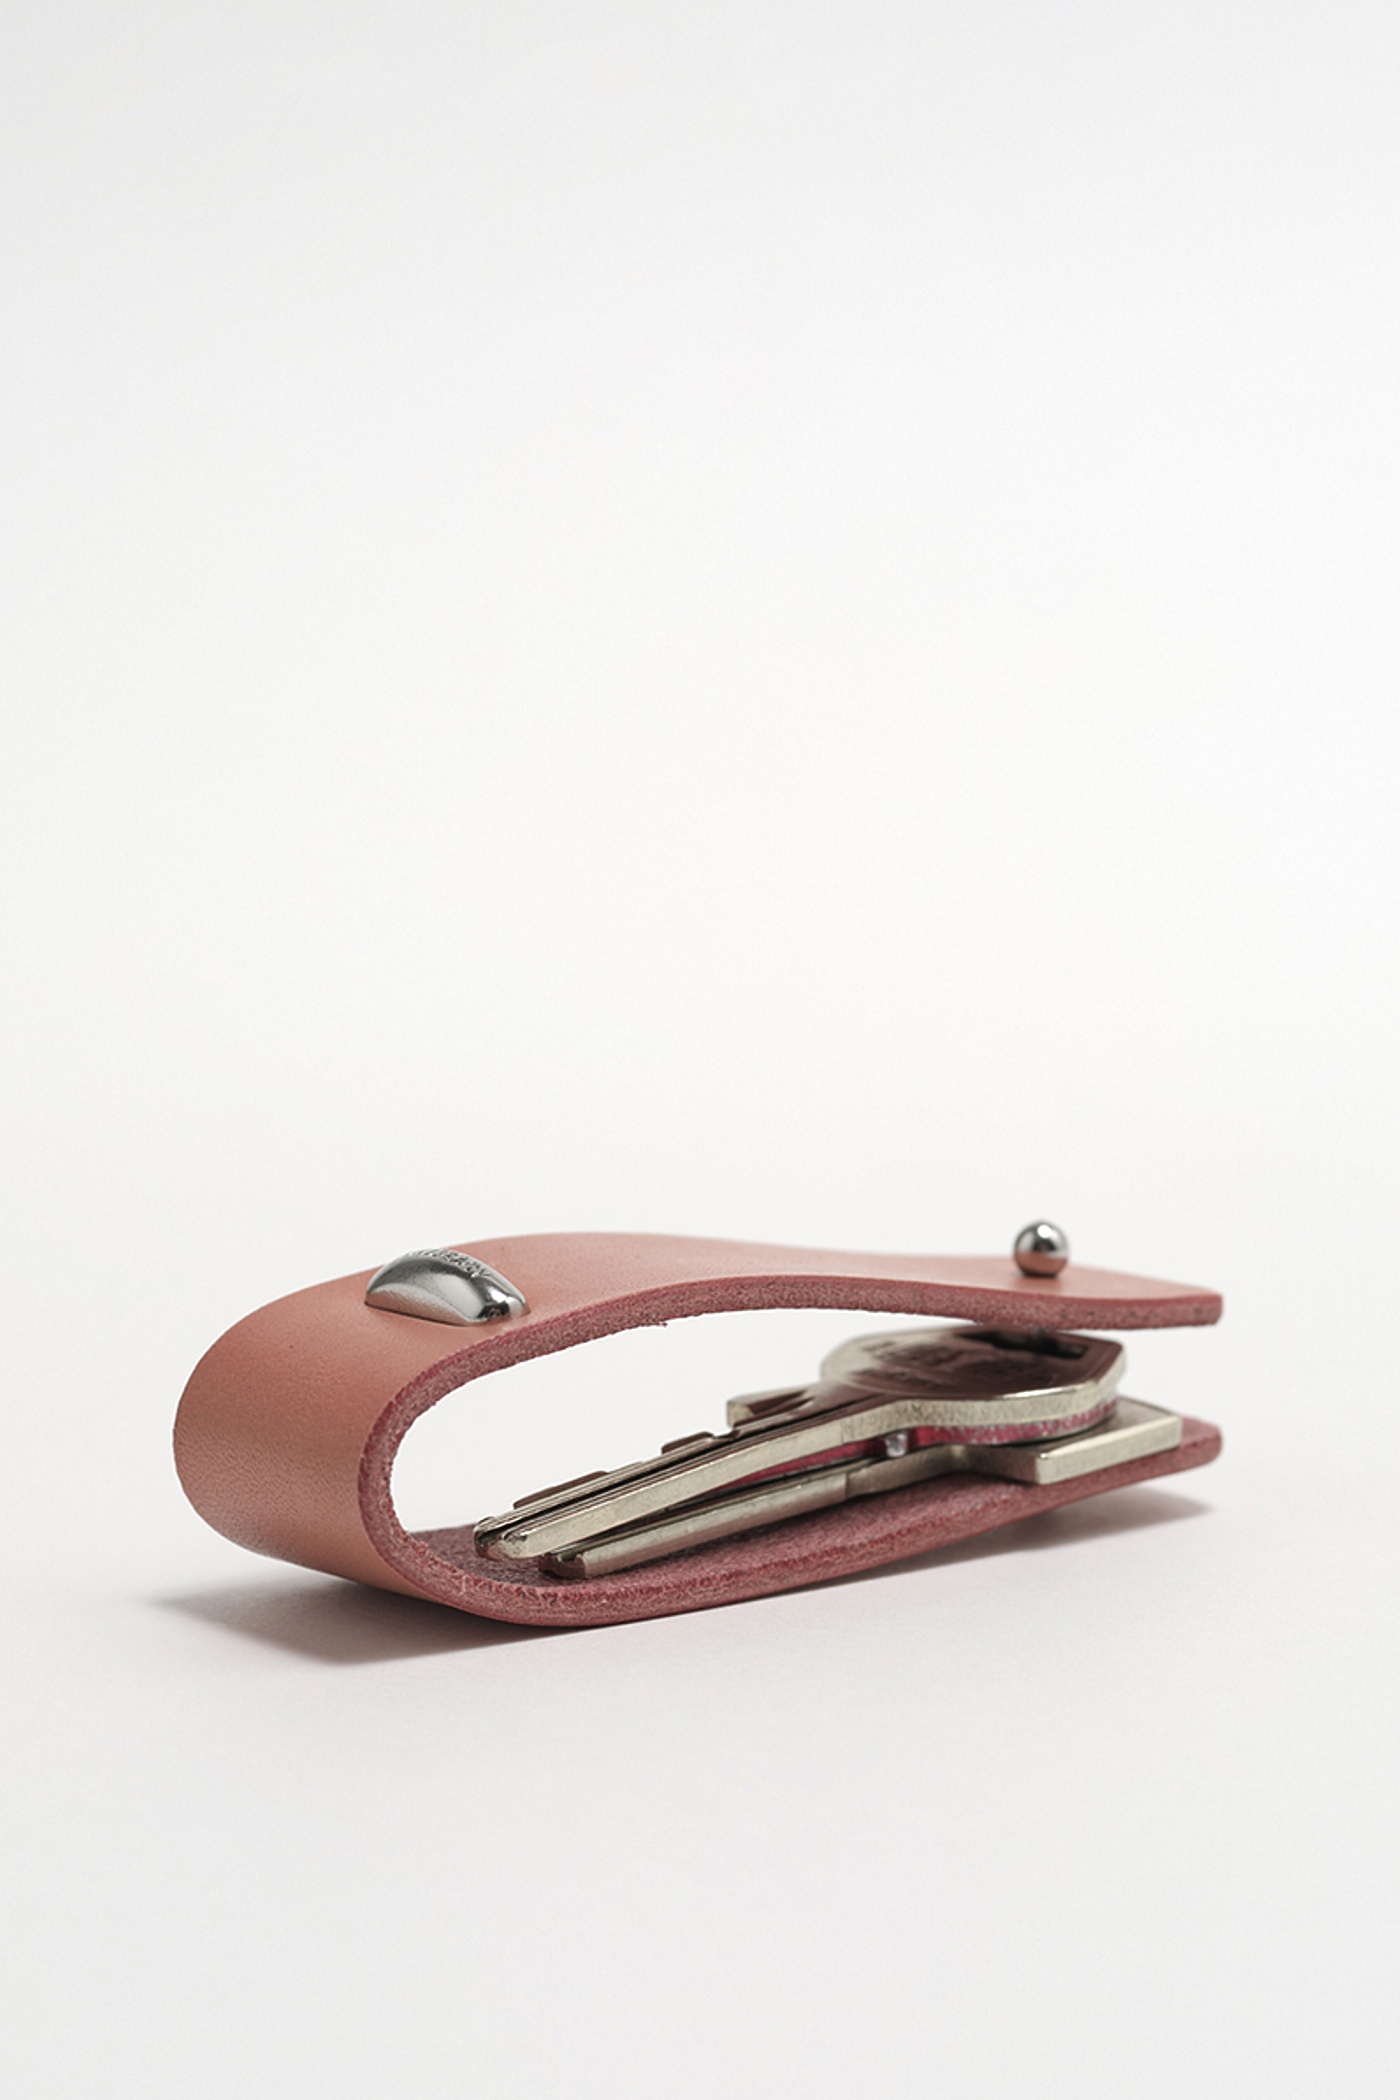 Pierced Key Holder Tasty Pink Leather - 2